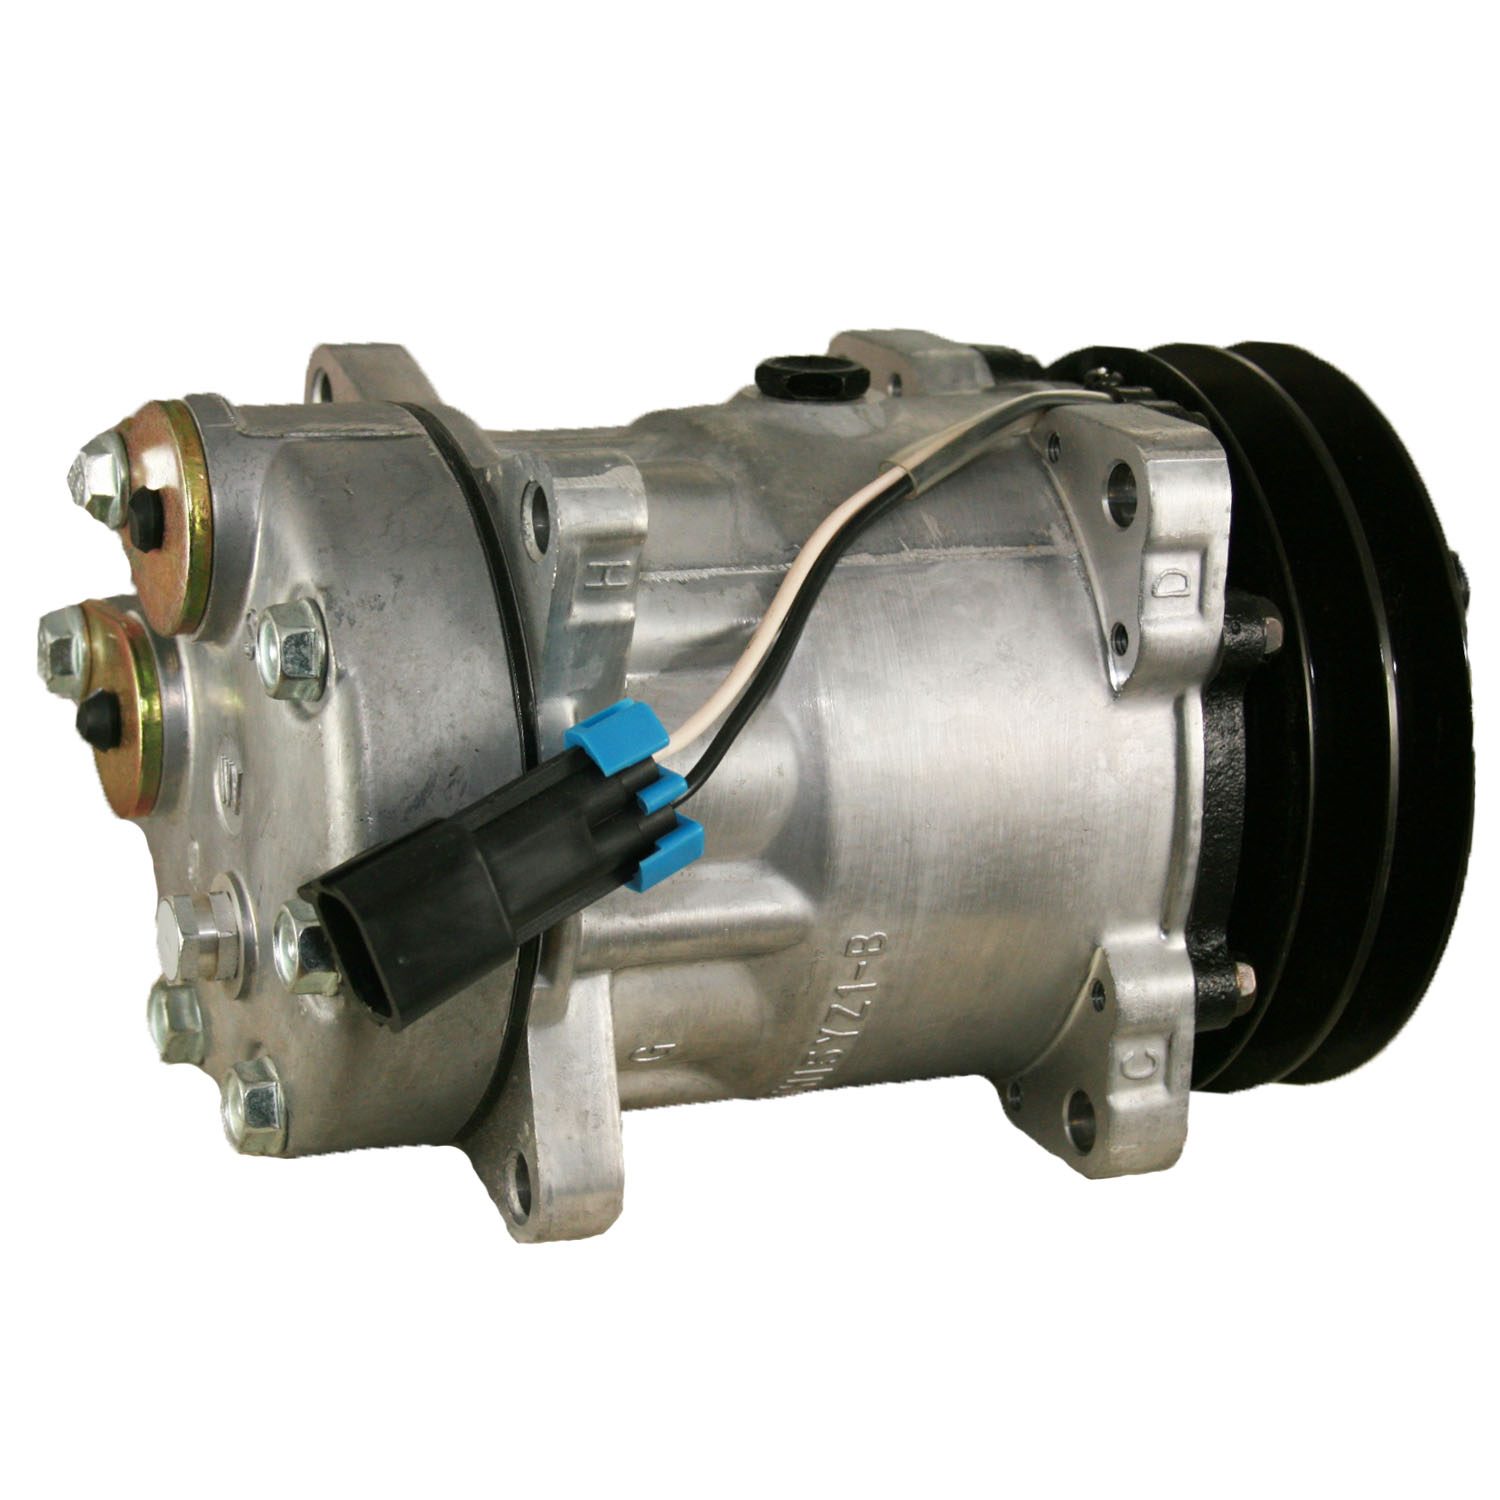 TCW Compressor 40582.201NEW New Product Image field_60b6a13a6e67c